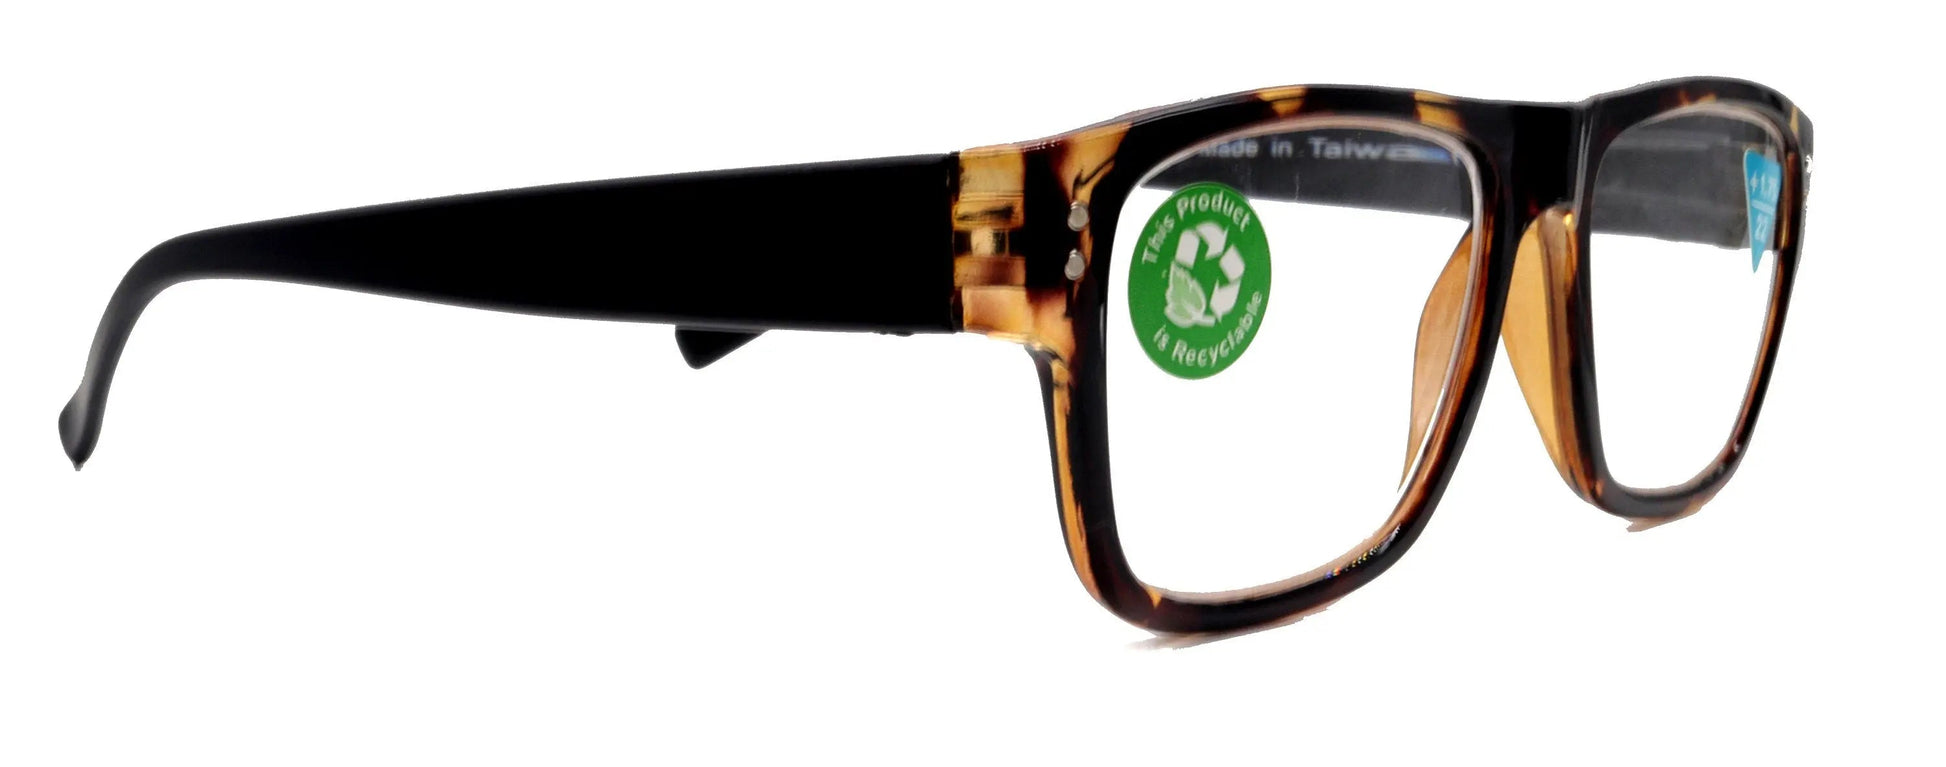 Brooklyn, (Premium) Reading Glasses, High End Reader +1.25...+3 Magnifying Eyeglasses (Tortoise Black, Brown) Square Frame. NY Fifth Avenue